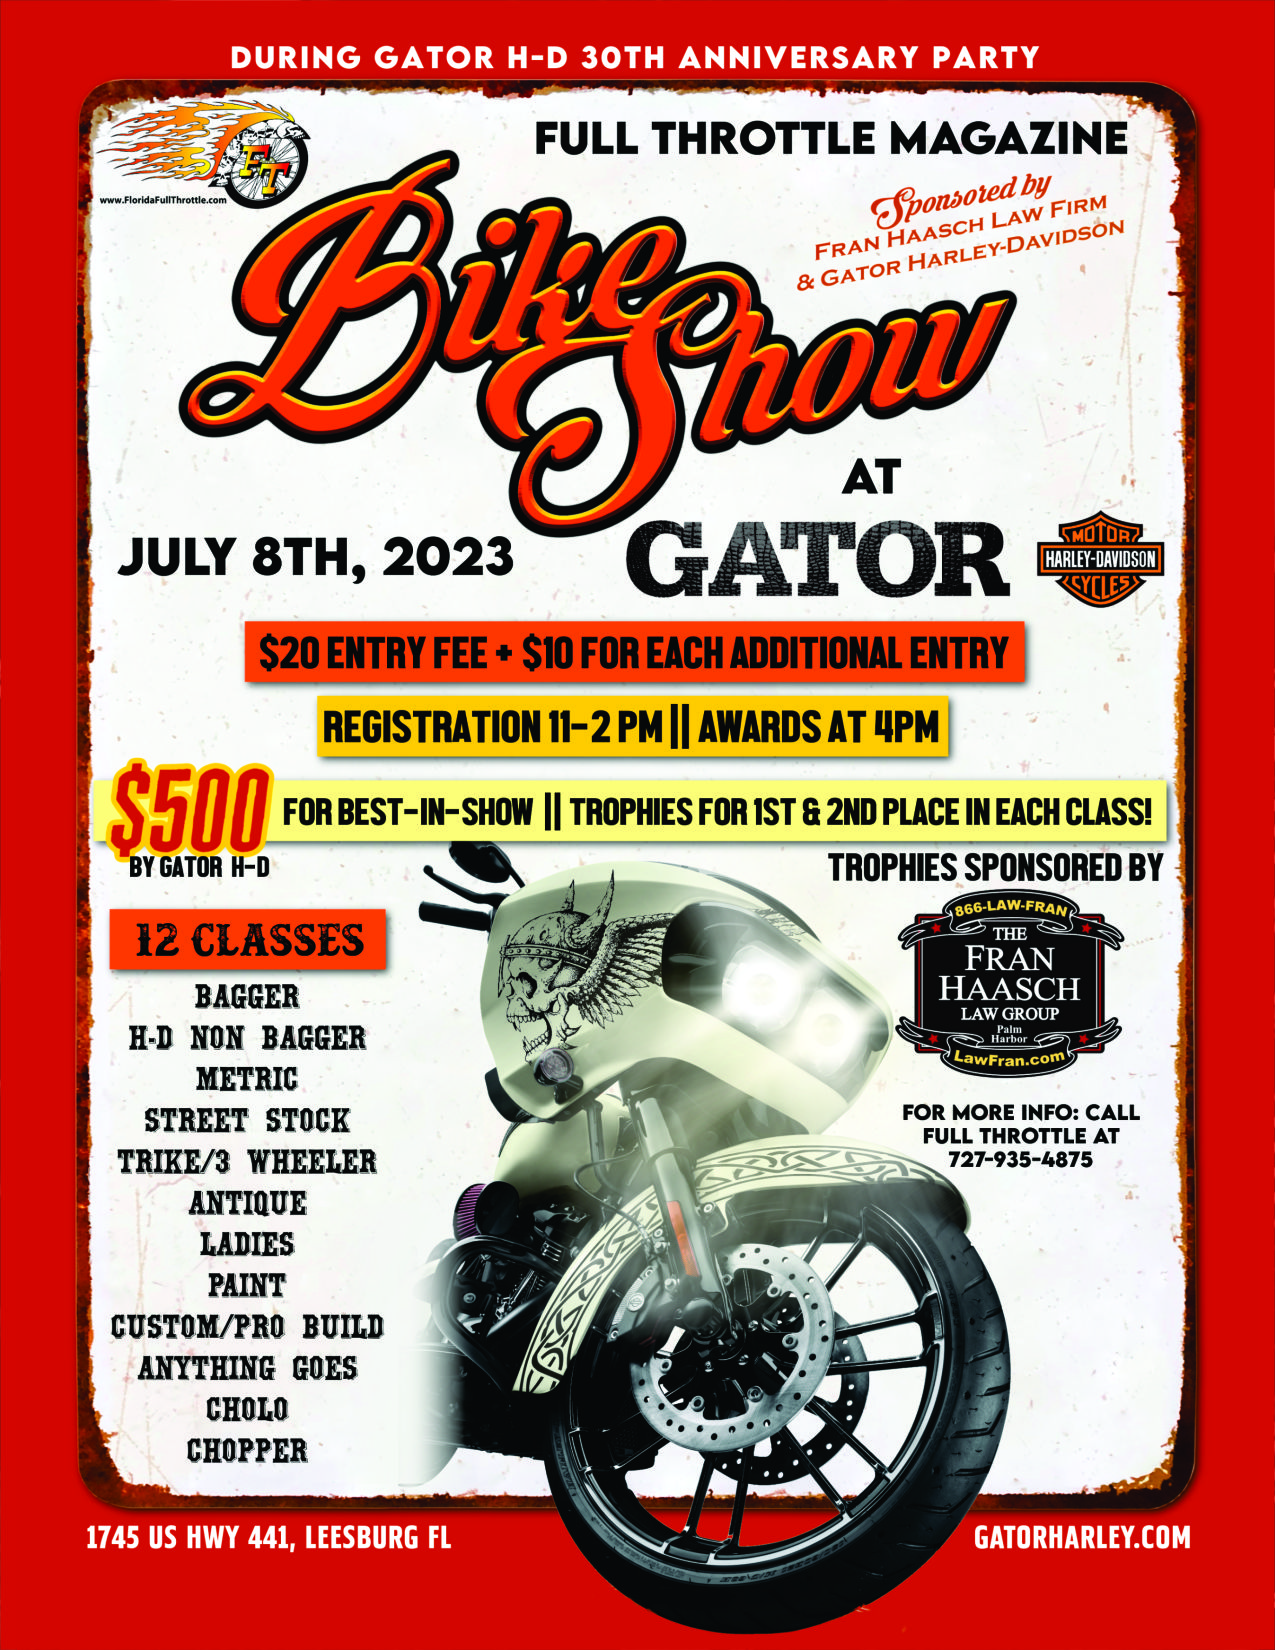 Fulll Throttle Bike Show at Gator HD